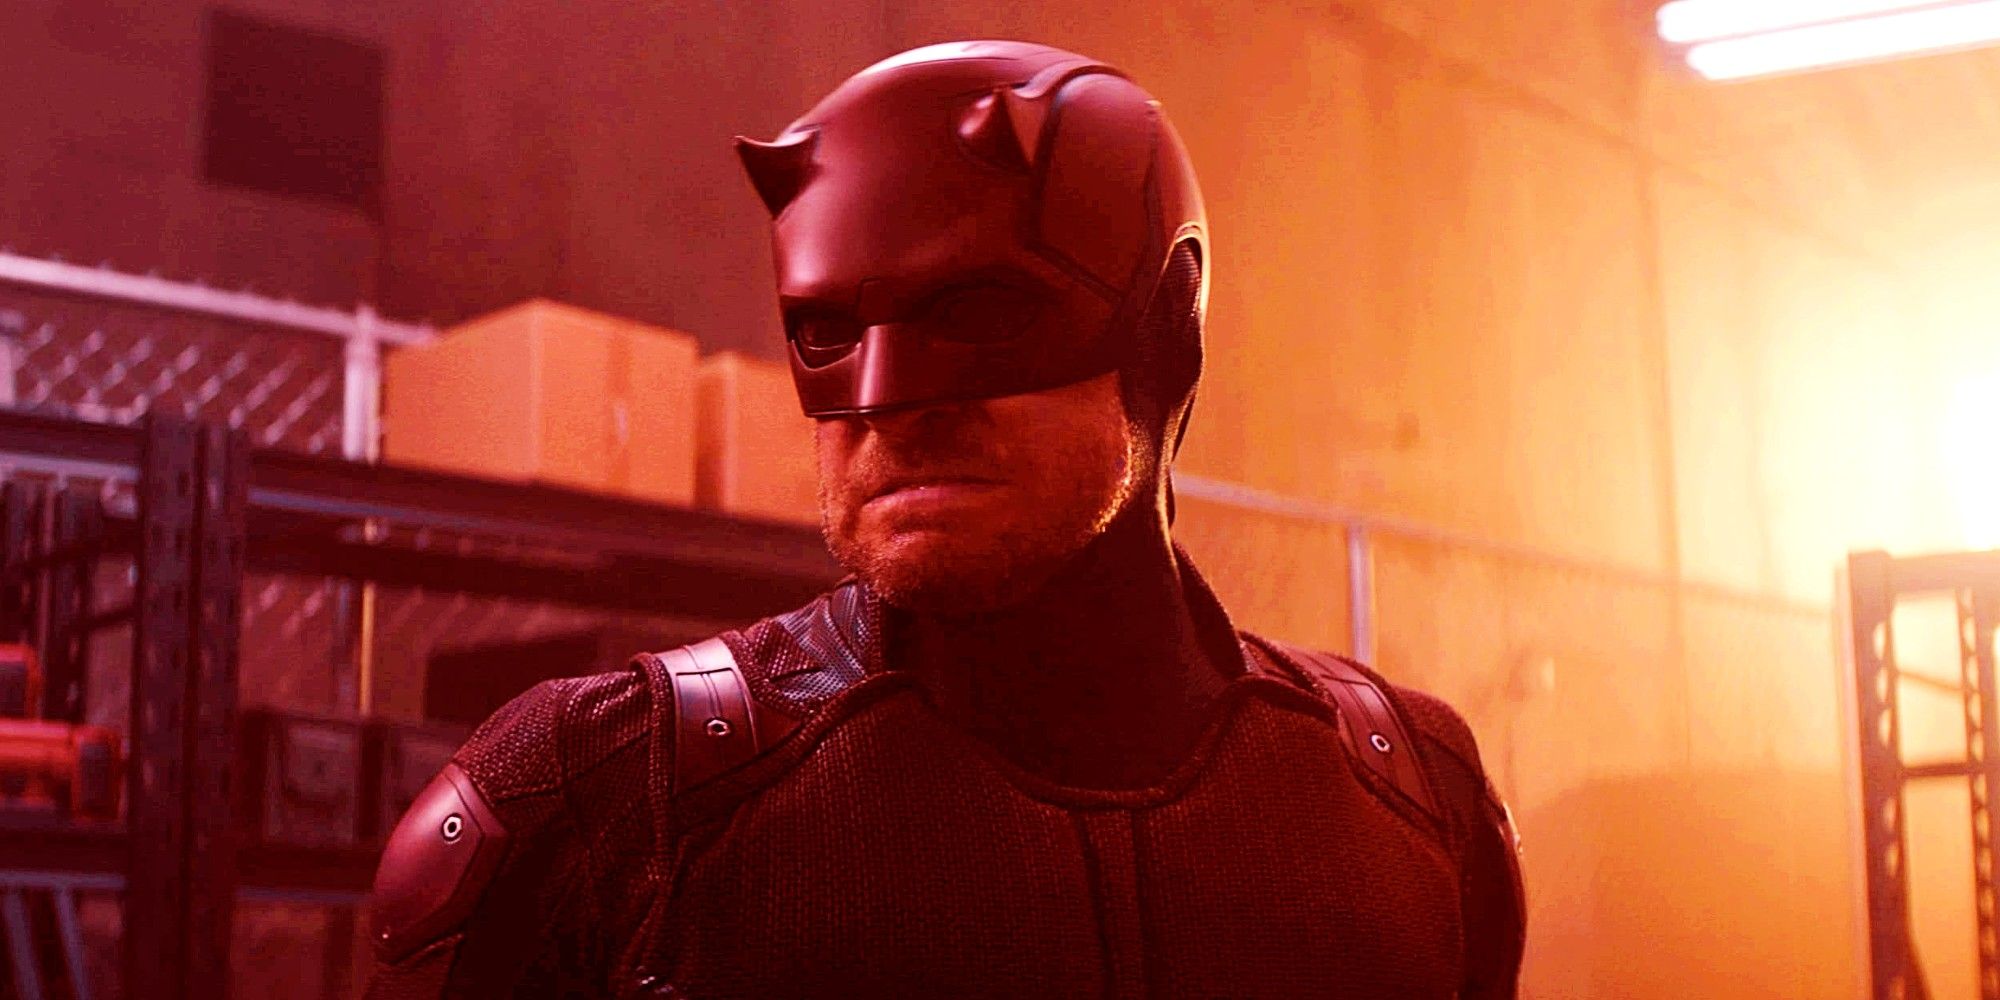 Charlie Cox as Matt Murdock In Full Daredevil Costume Poised Mid-Fight In Echo Episode 1